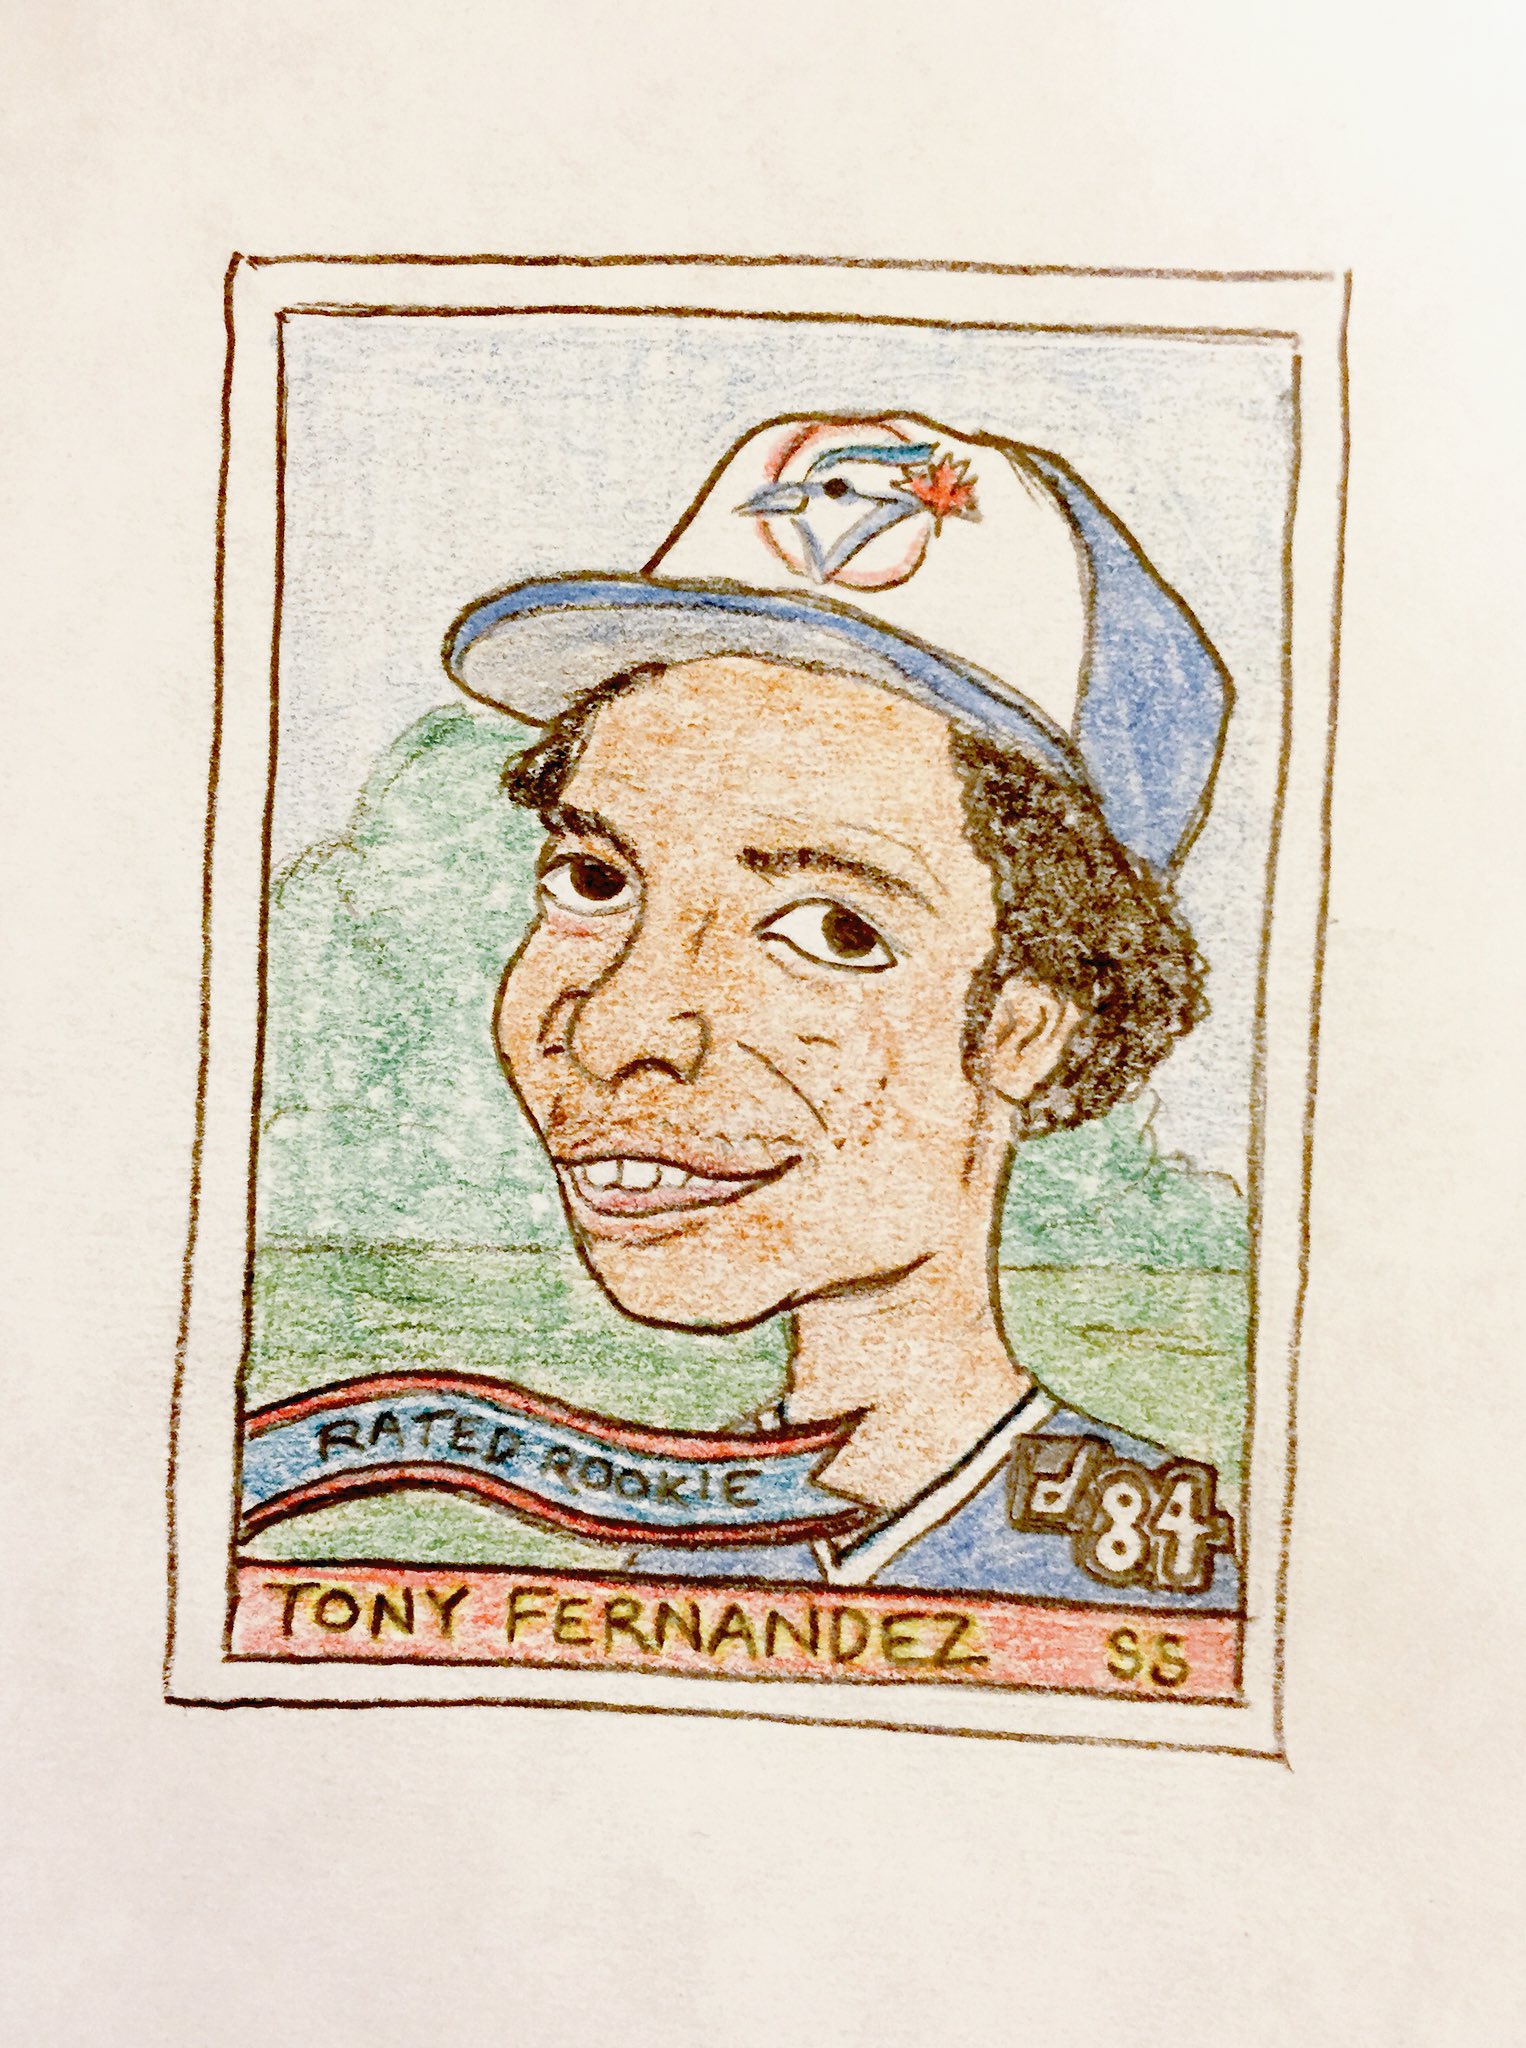 Wishing a very happy 55th birthday to Tony Fernandez!    